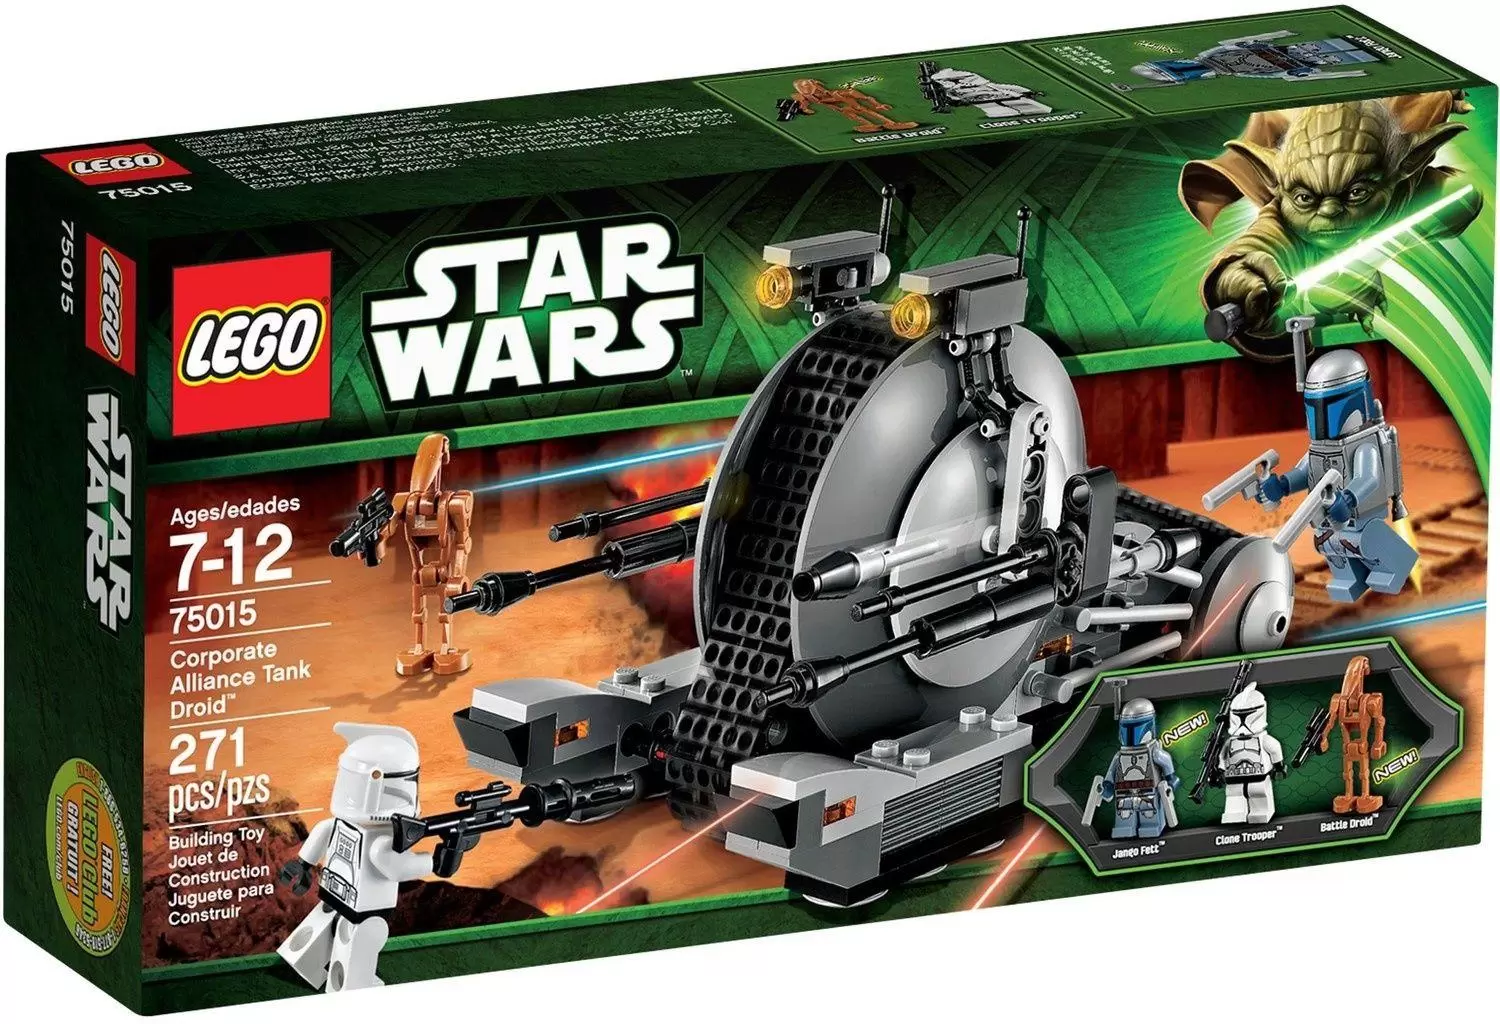 LEGO Star Wars - Corporate Alliance Tank Droid